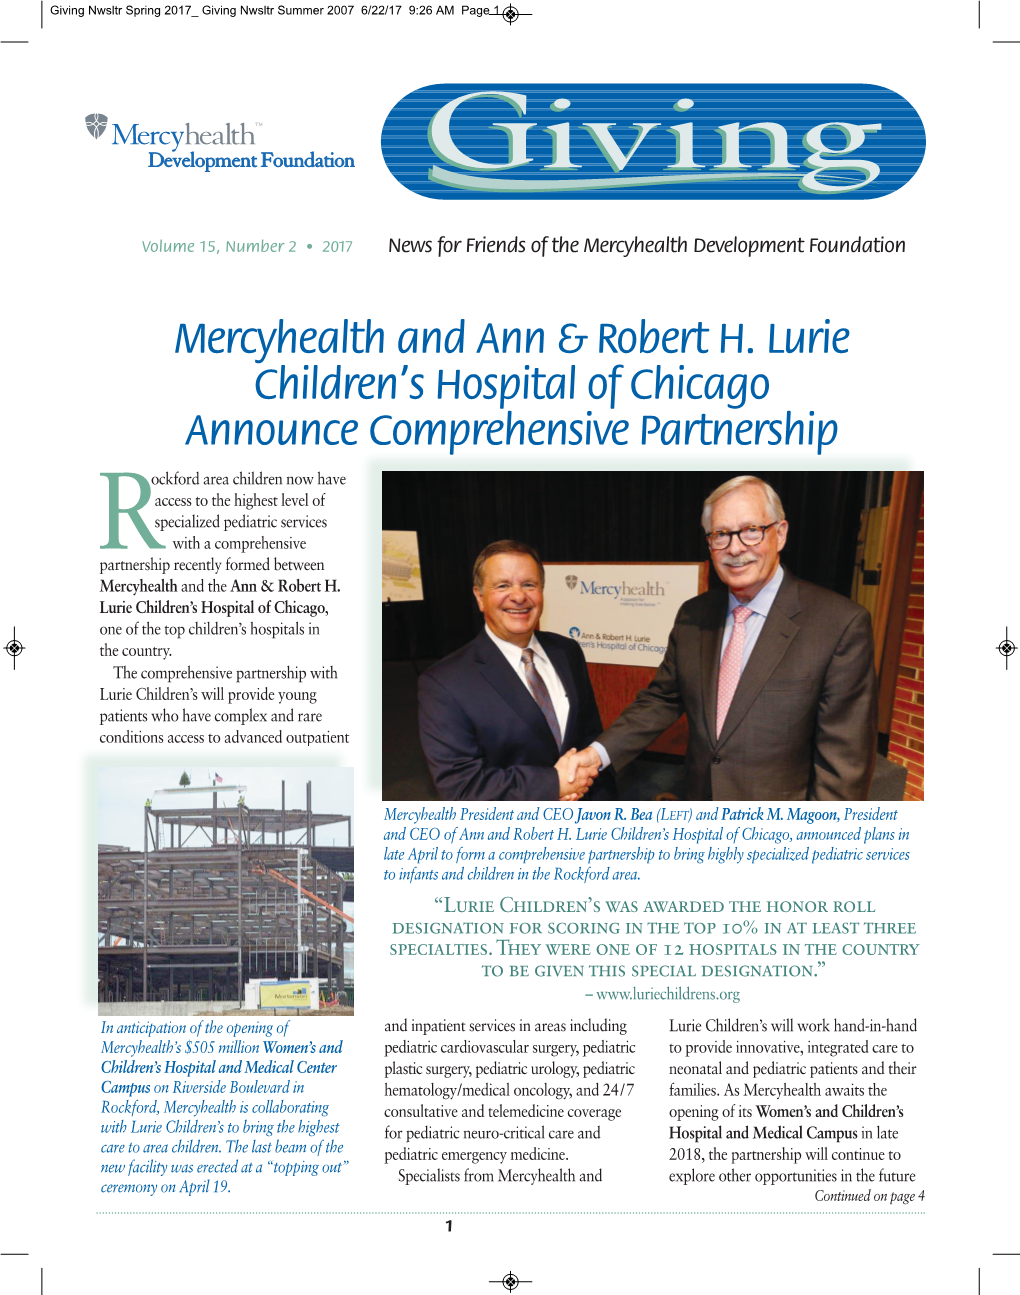 Mercyhealth and Ann & Robert H. Lurie Children's Hospital Of